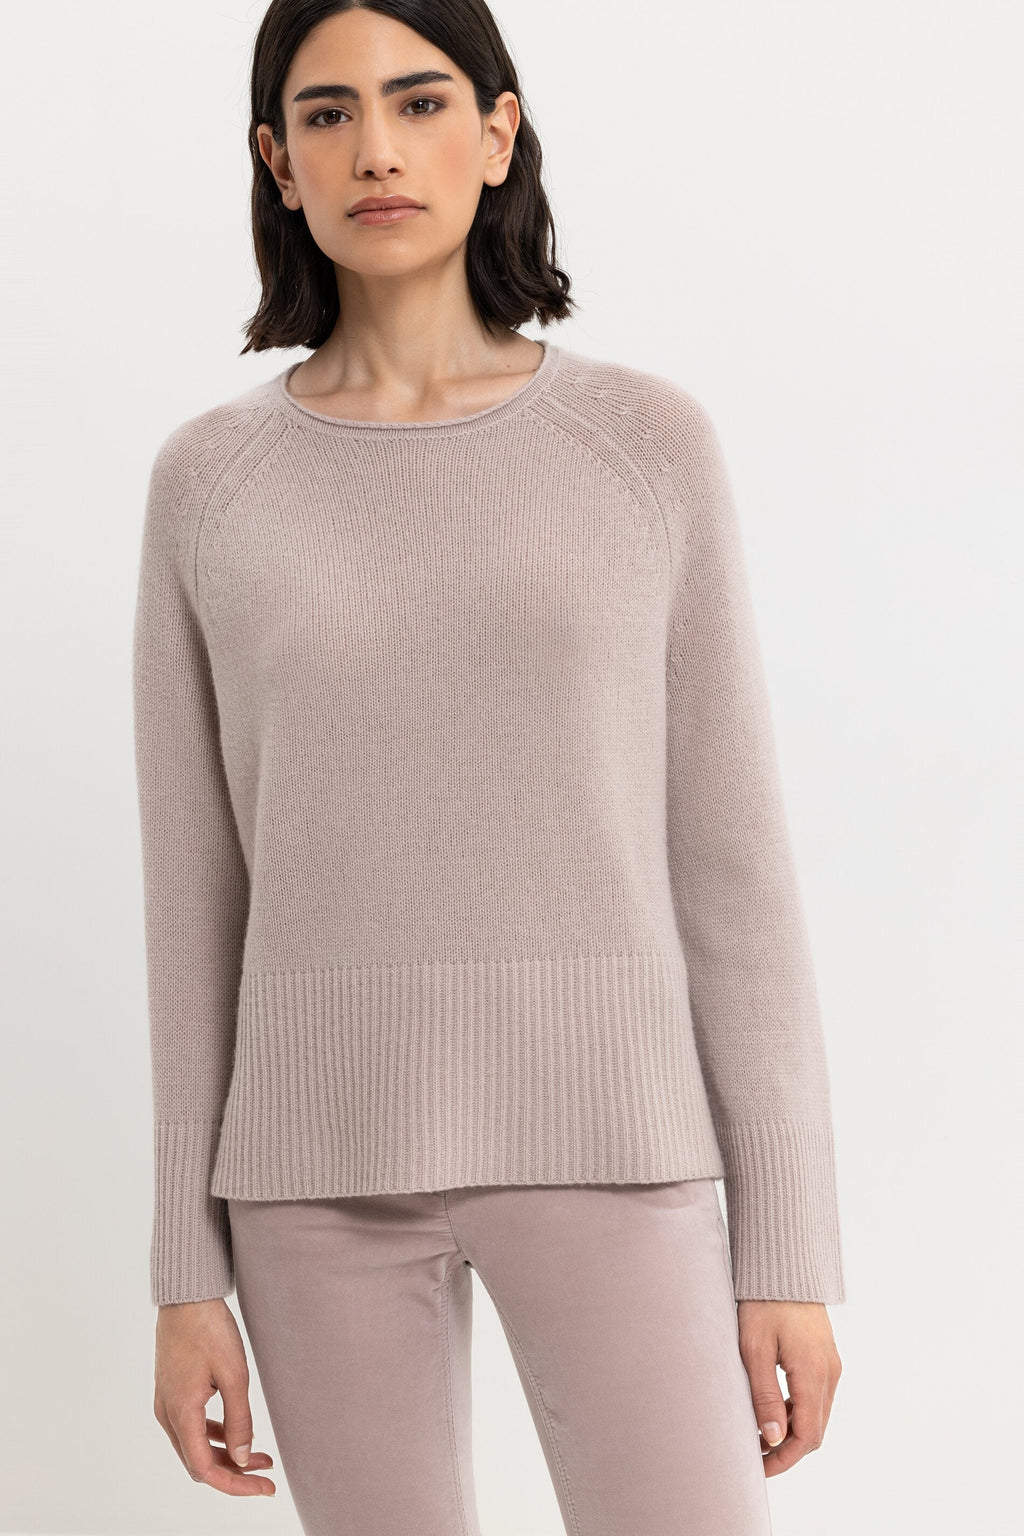 LUISA CERANO OUTLET SALE Cashmere Mix Sweater ARCHIVIST